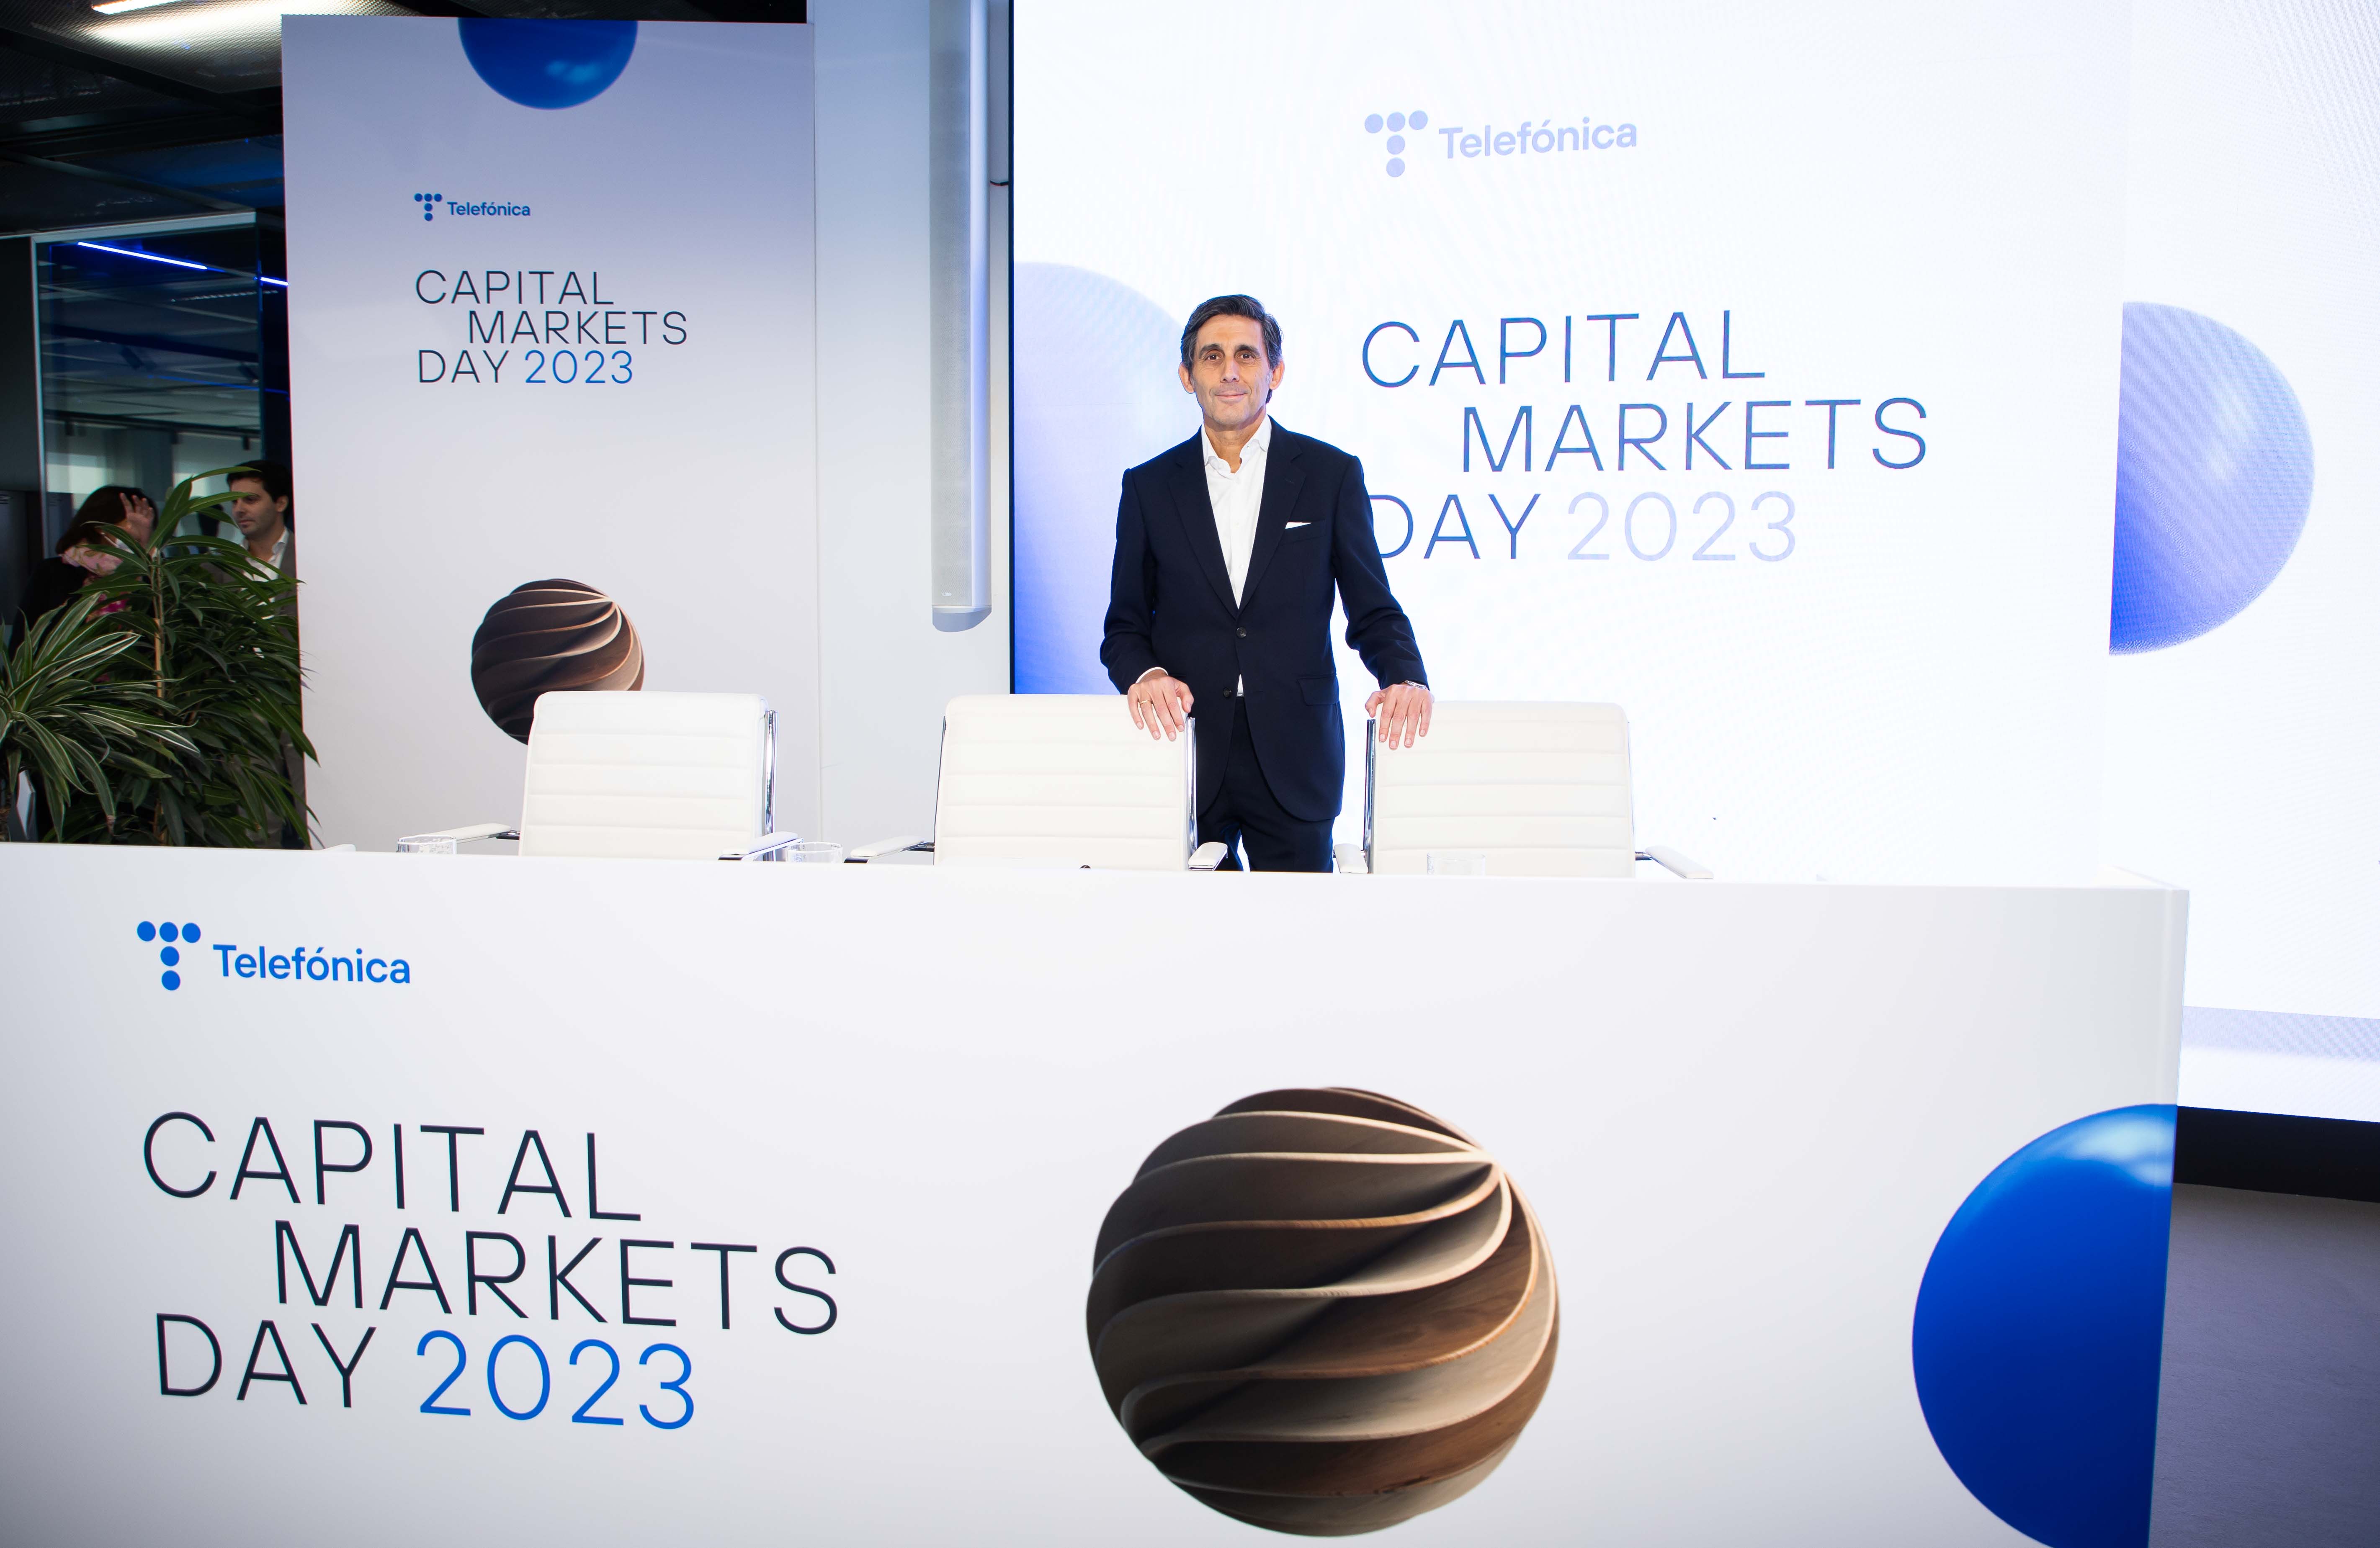 José María Álvarez-Pallete, Chairman & CEO, Telefónica S.A. at Capital Markets Day 2023